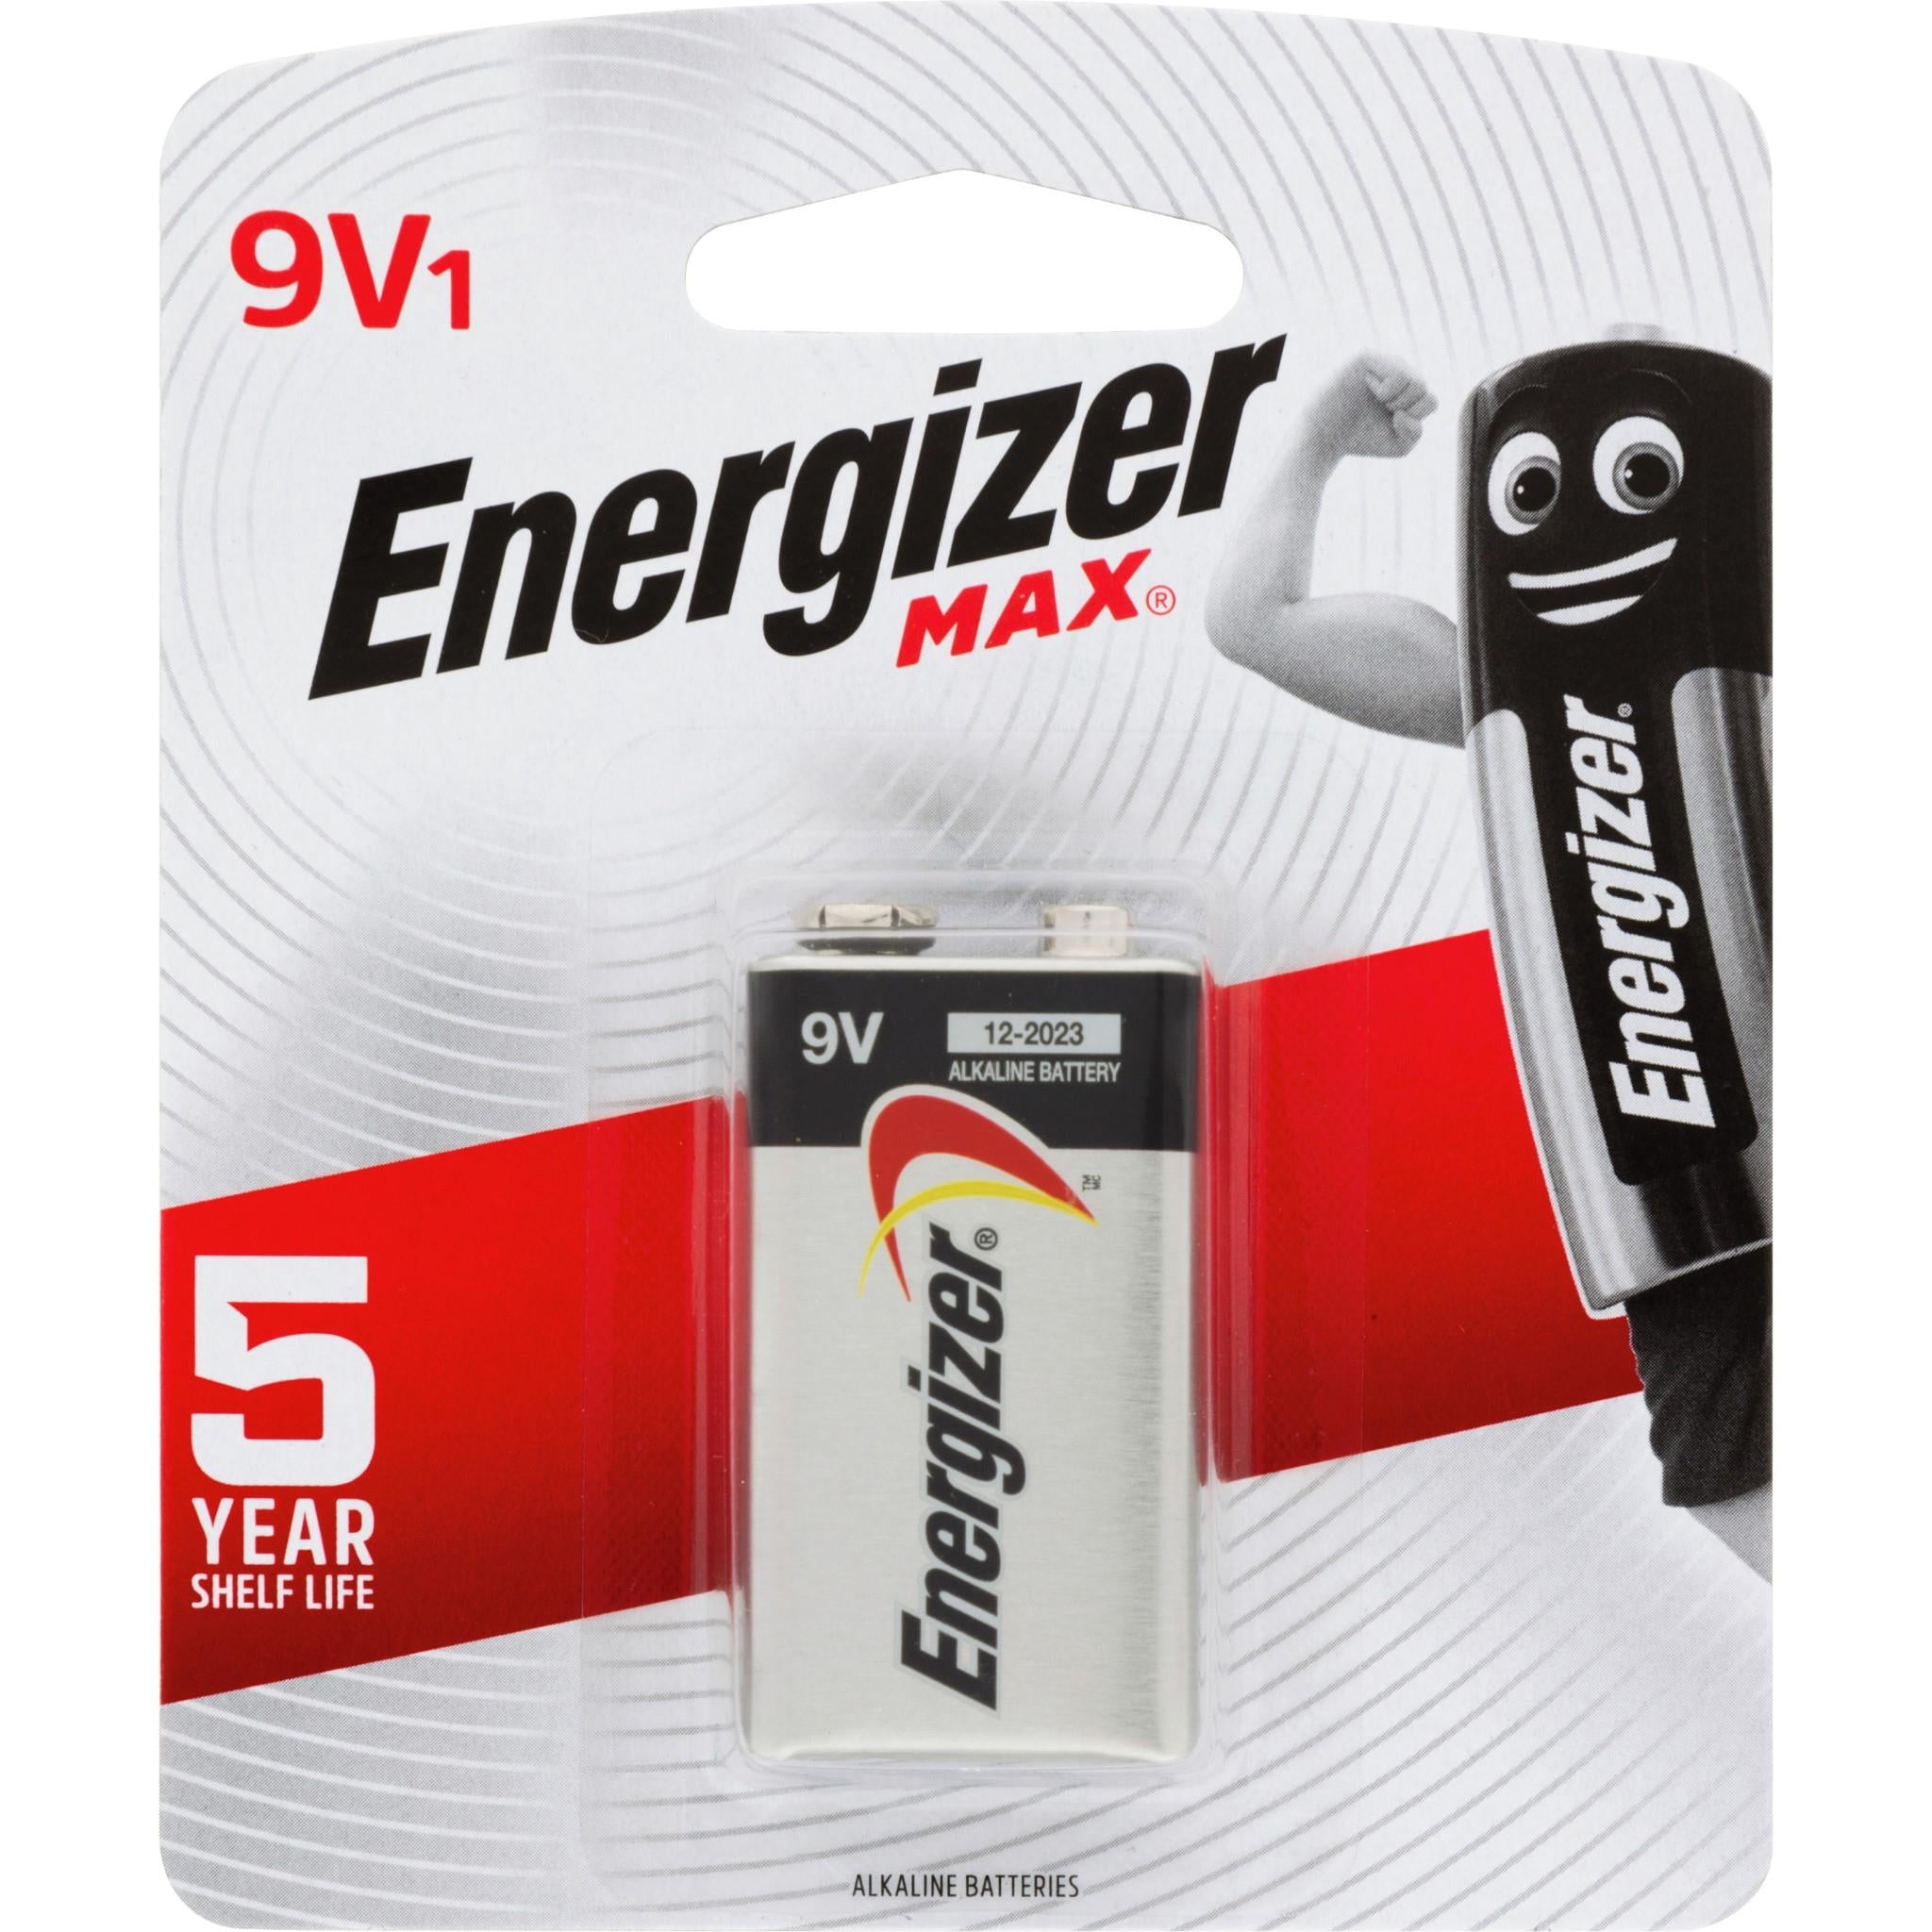 Energizer Max 9V Battery - JB Hi-Fi